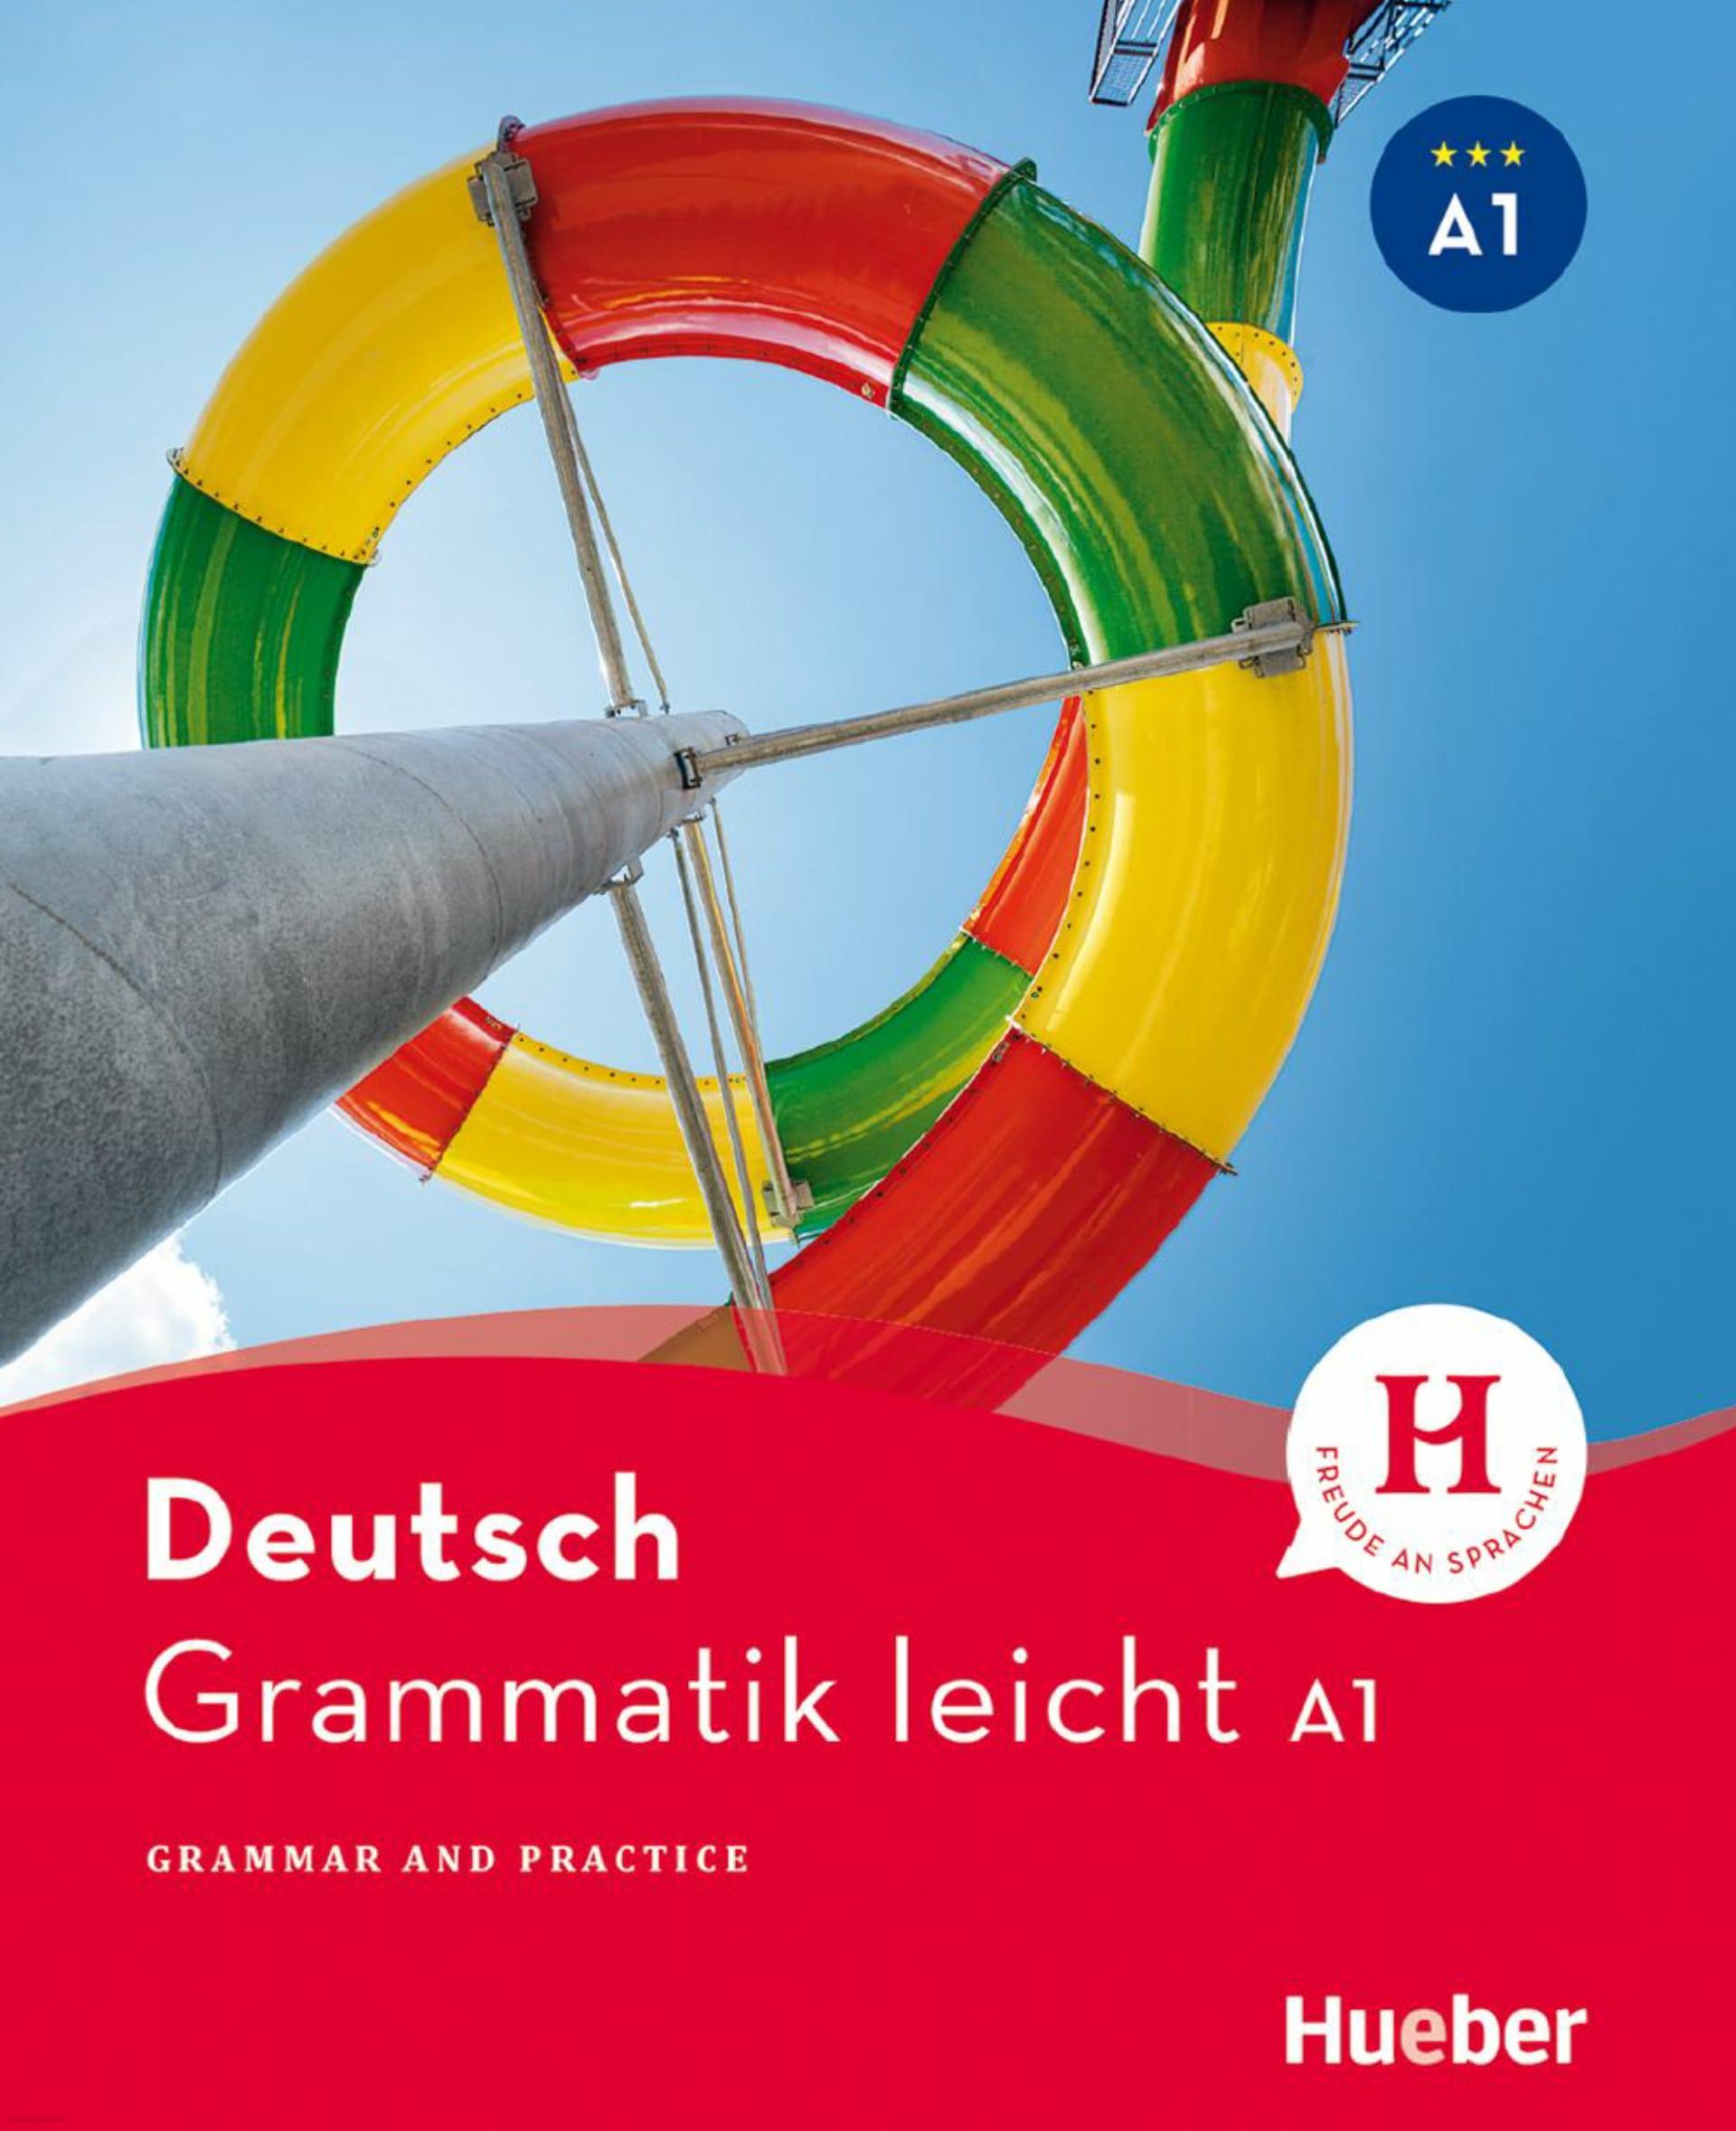 دانلود کتاب آلمانیDeutsch Grammatik leicht_A1